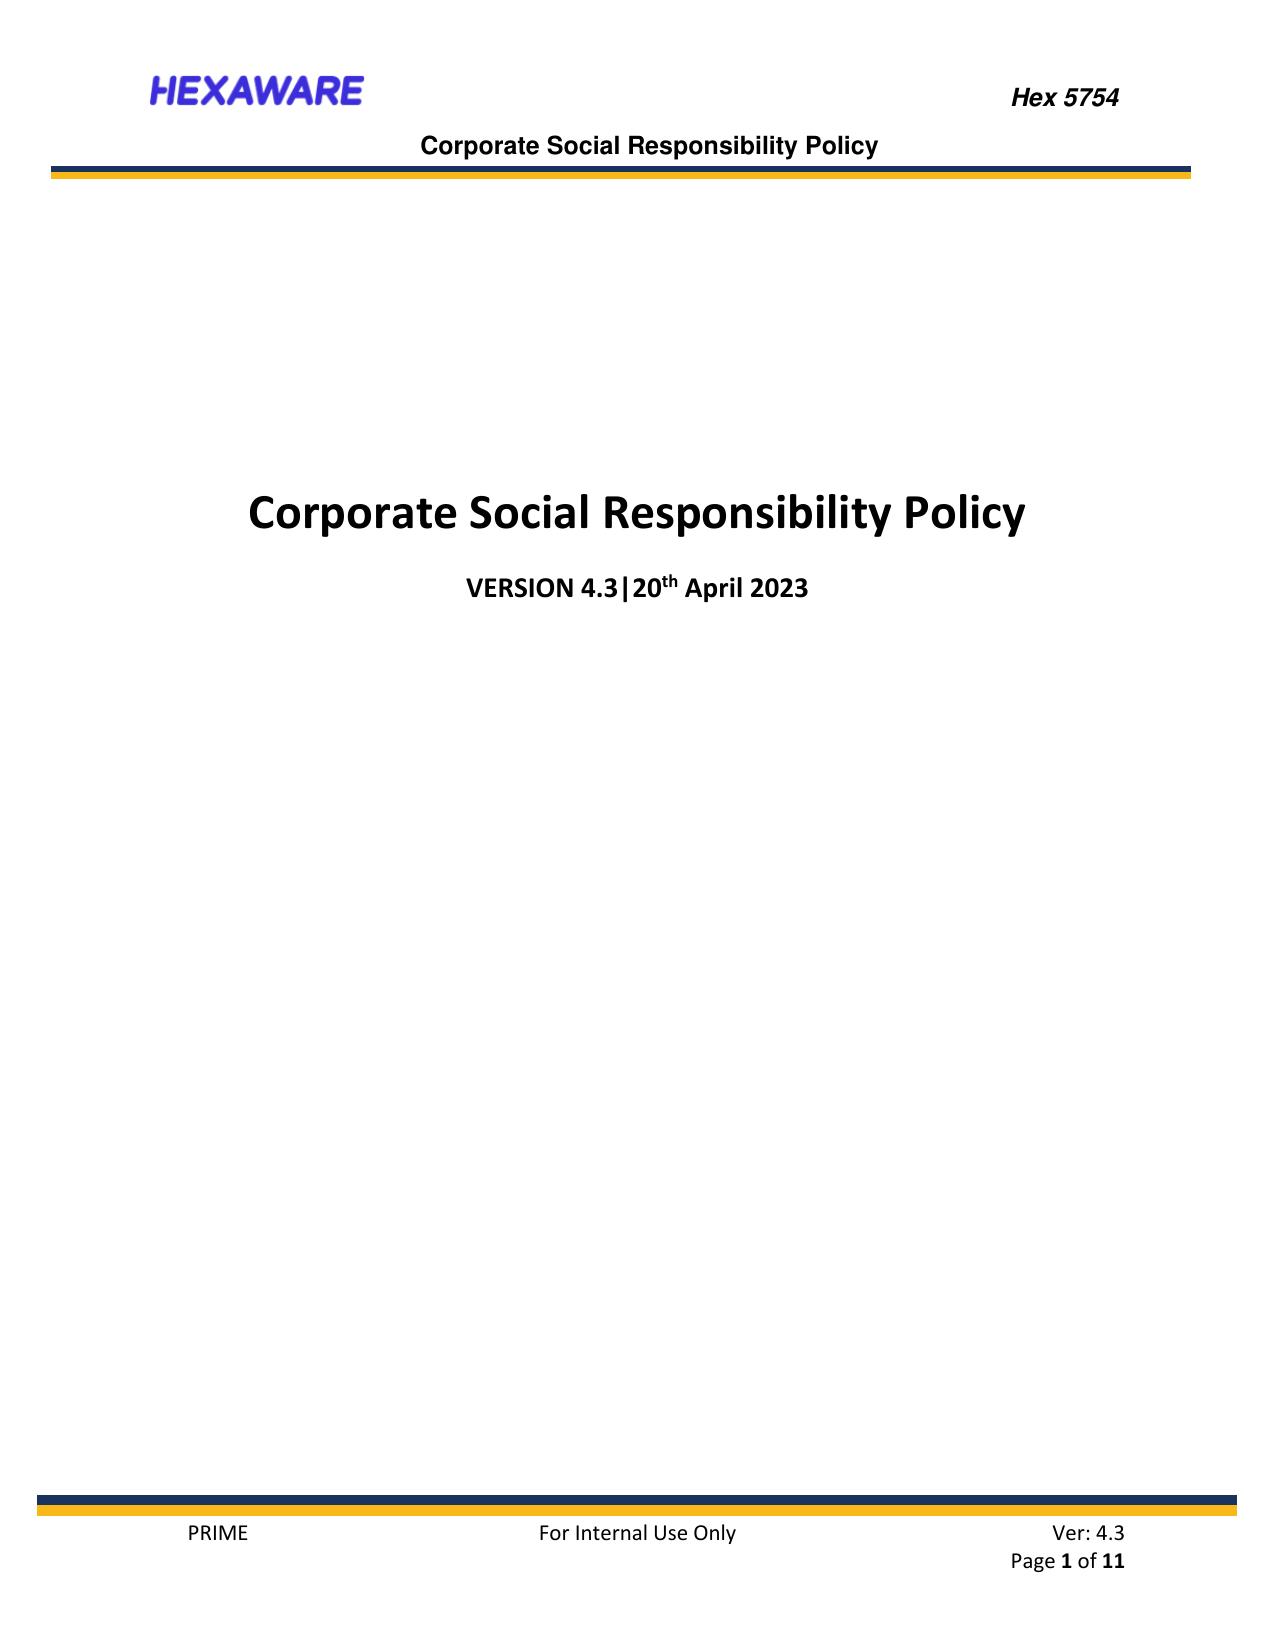 2024 Corporate social responsibility Report